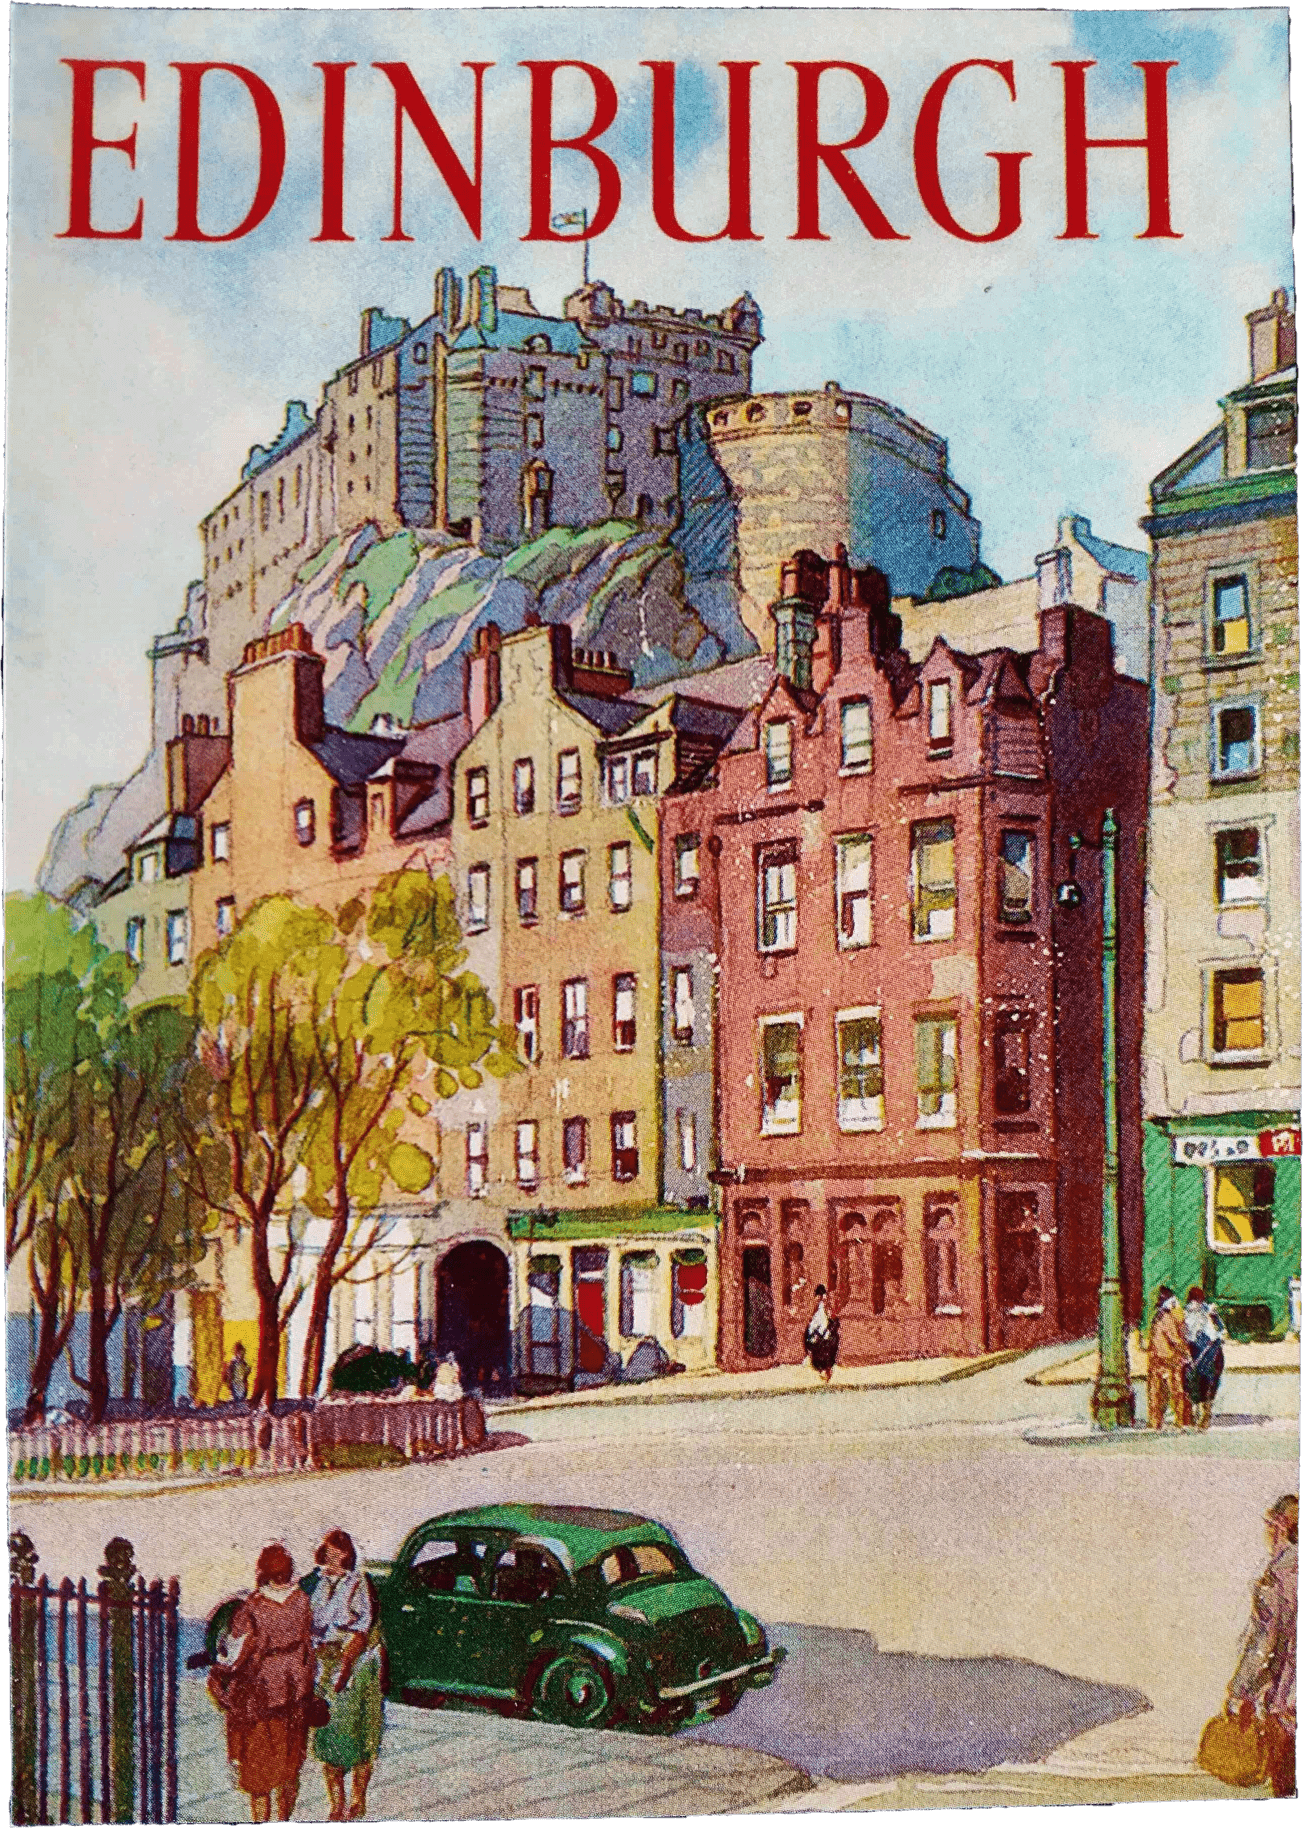 A mid twentieth century street in 'Edinburgh'